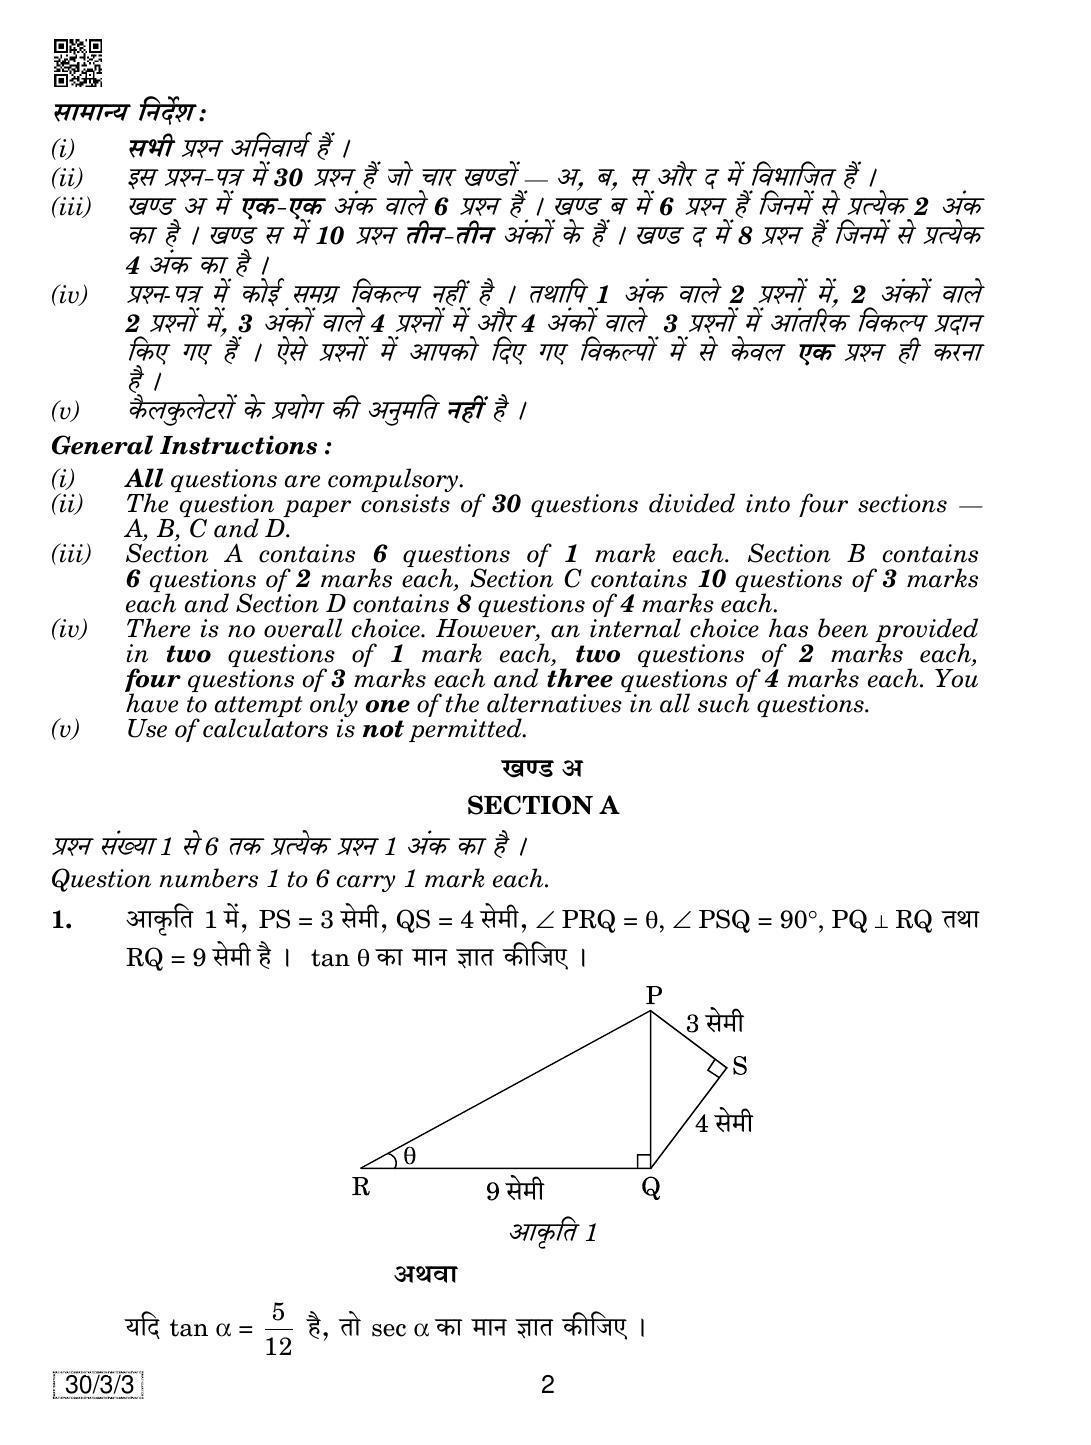 CBSE Class 10 Maths (30/3/3 - SET 3) 2019 Question Paper - Page 2